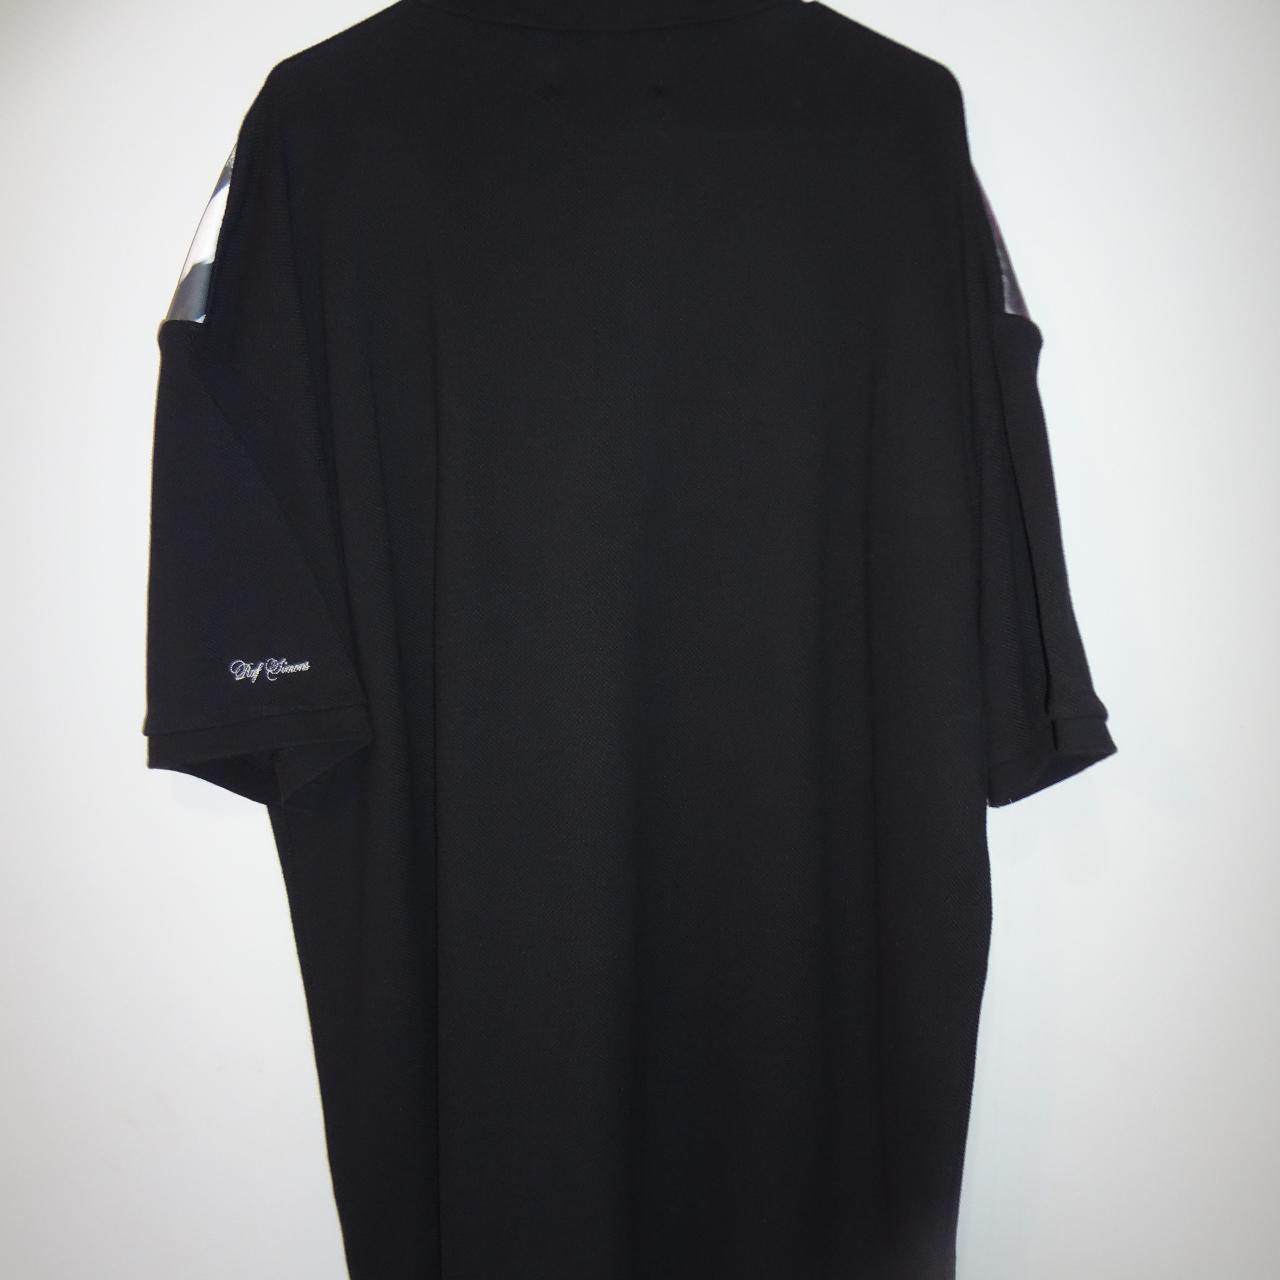 Raf Simons Men's Black Polo-shirts (3)